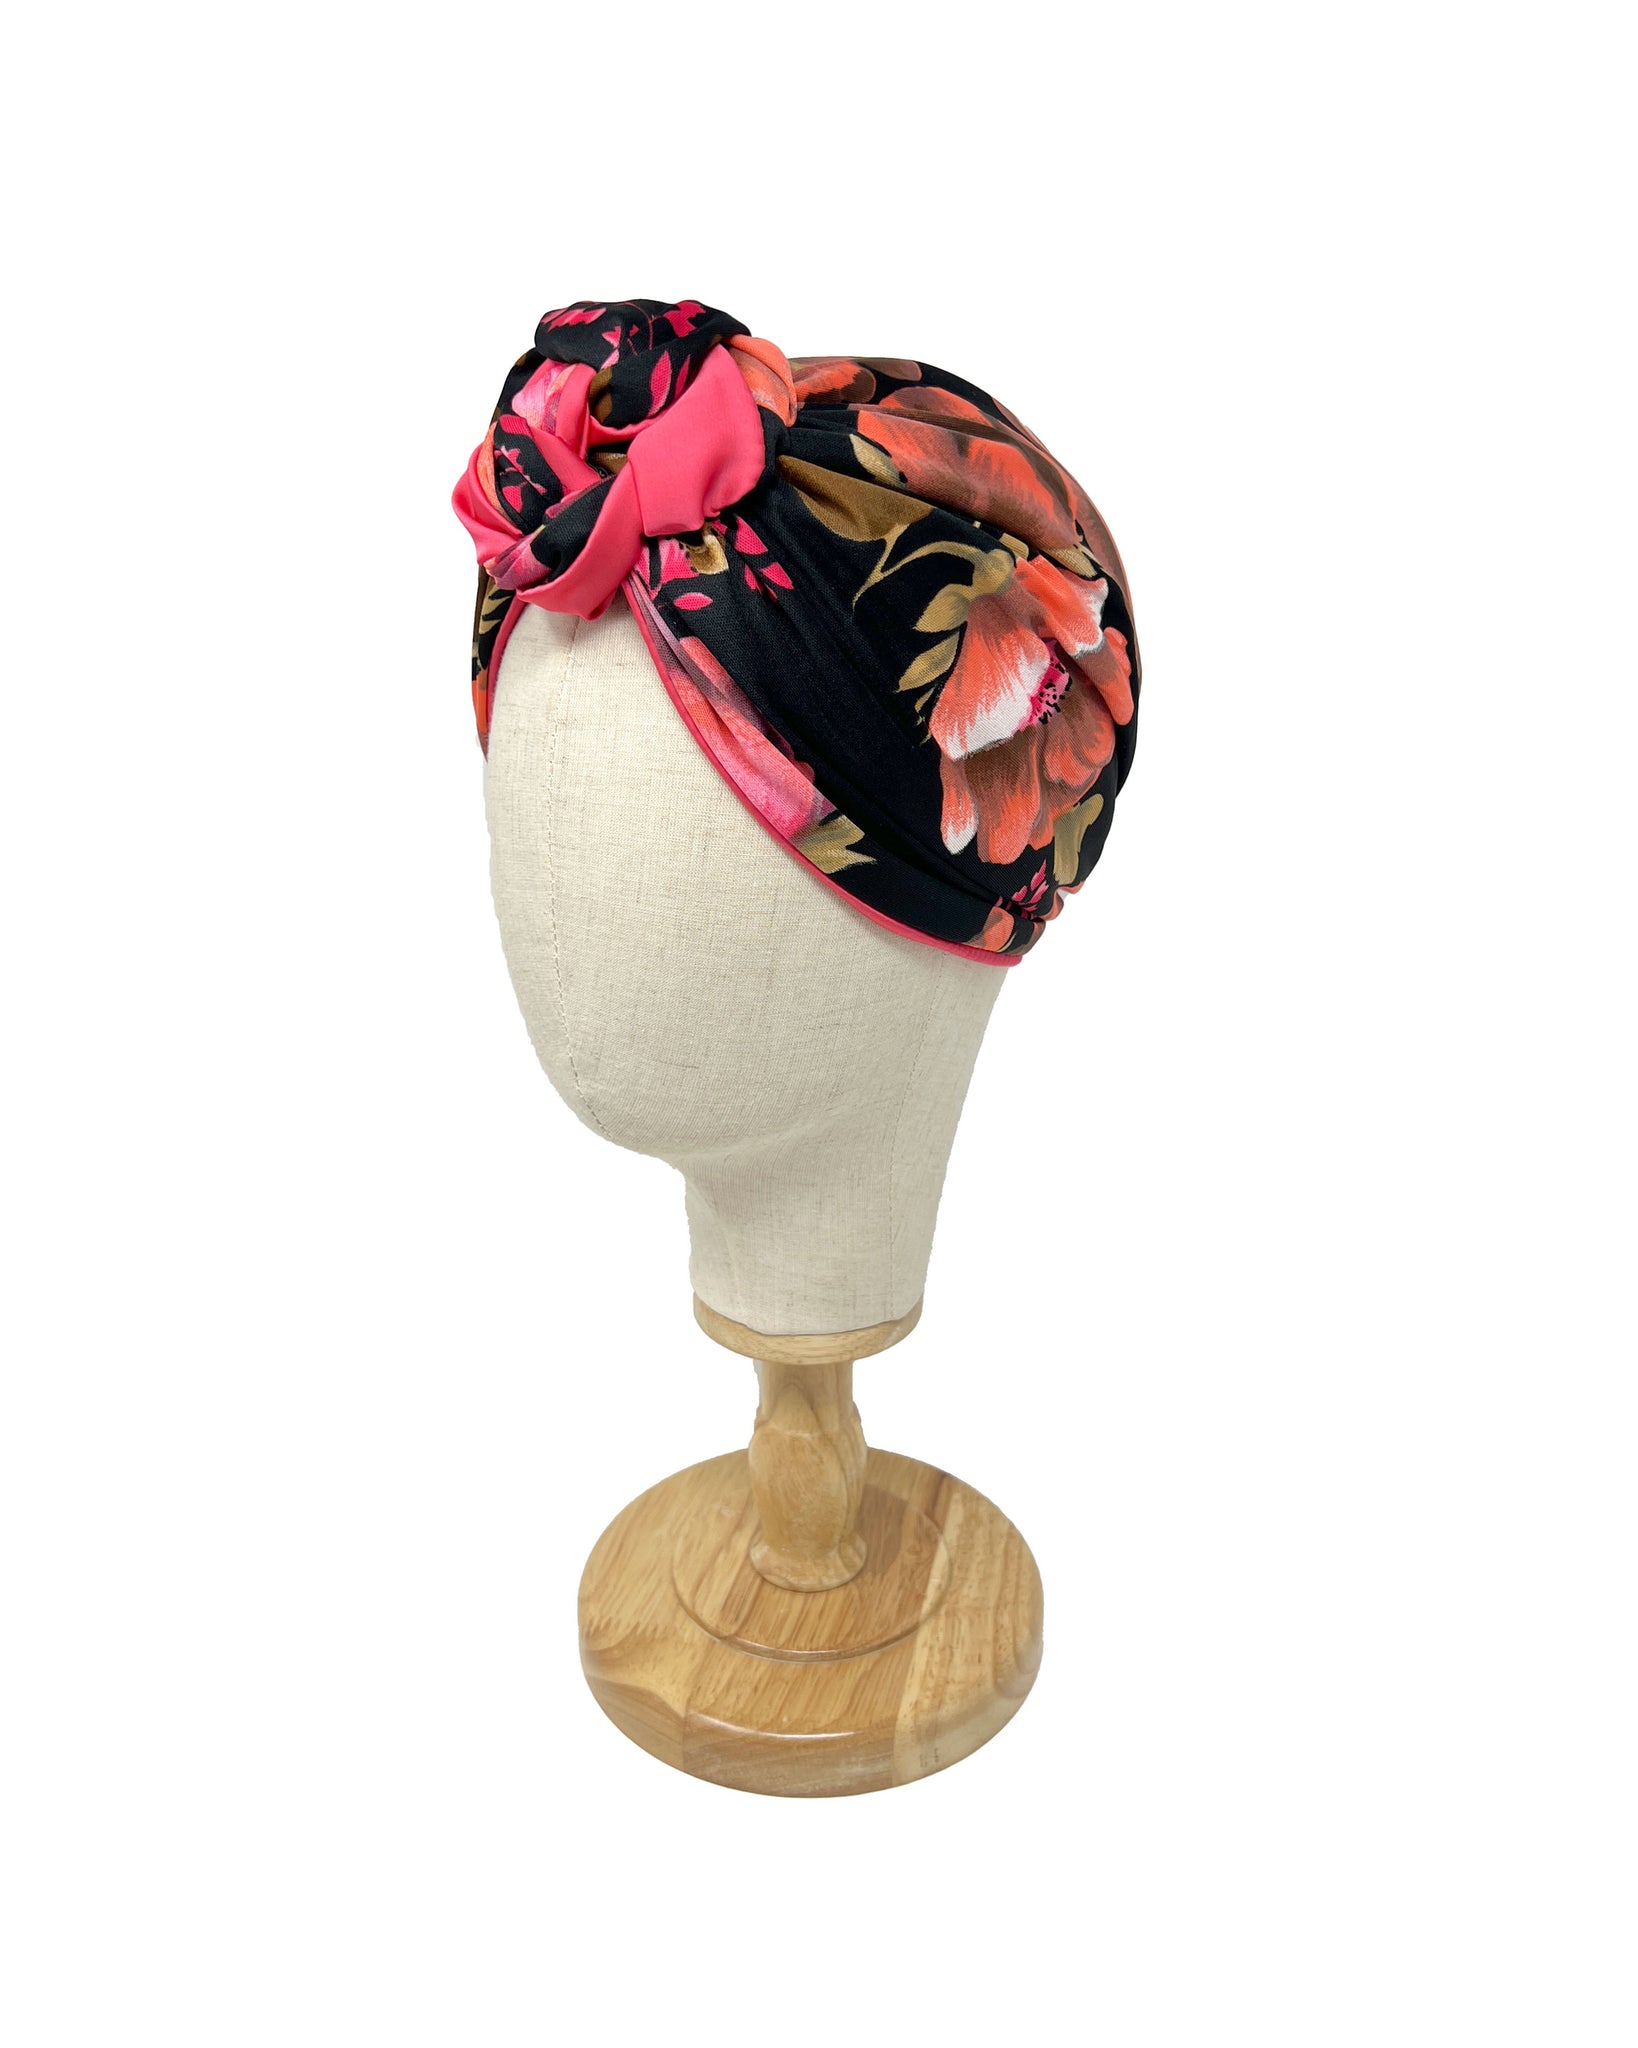 Black and pink floral patterned vintage "Rachel" turban